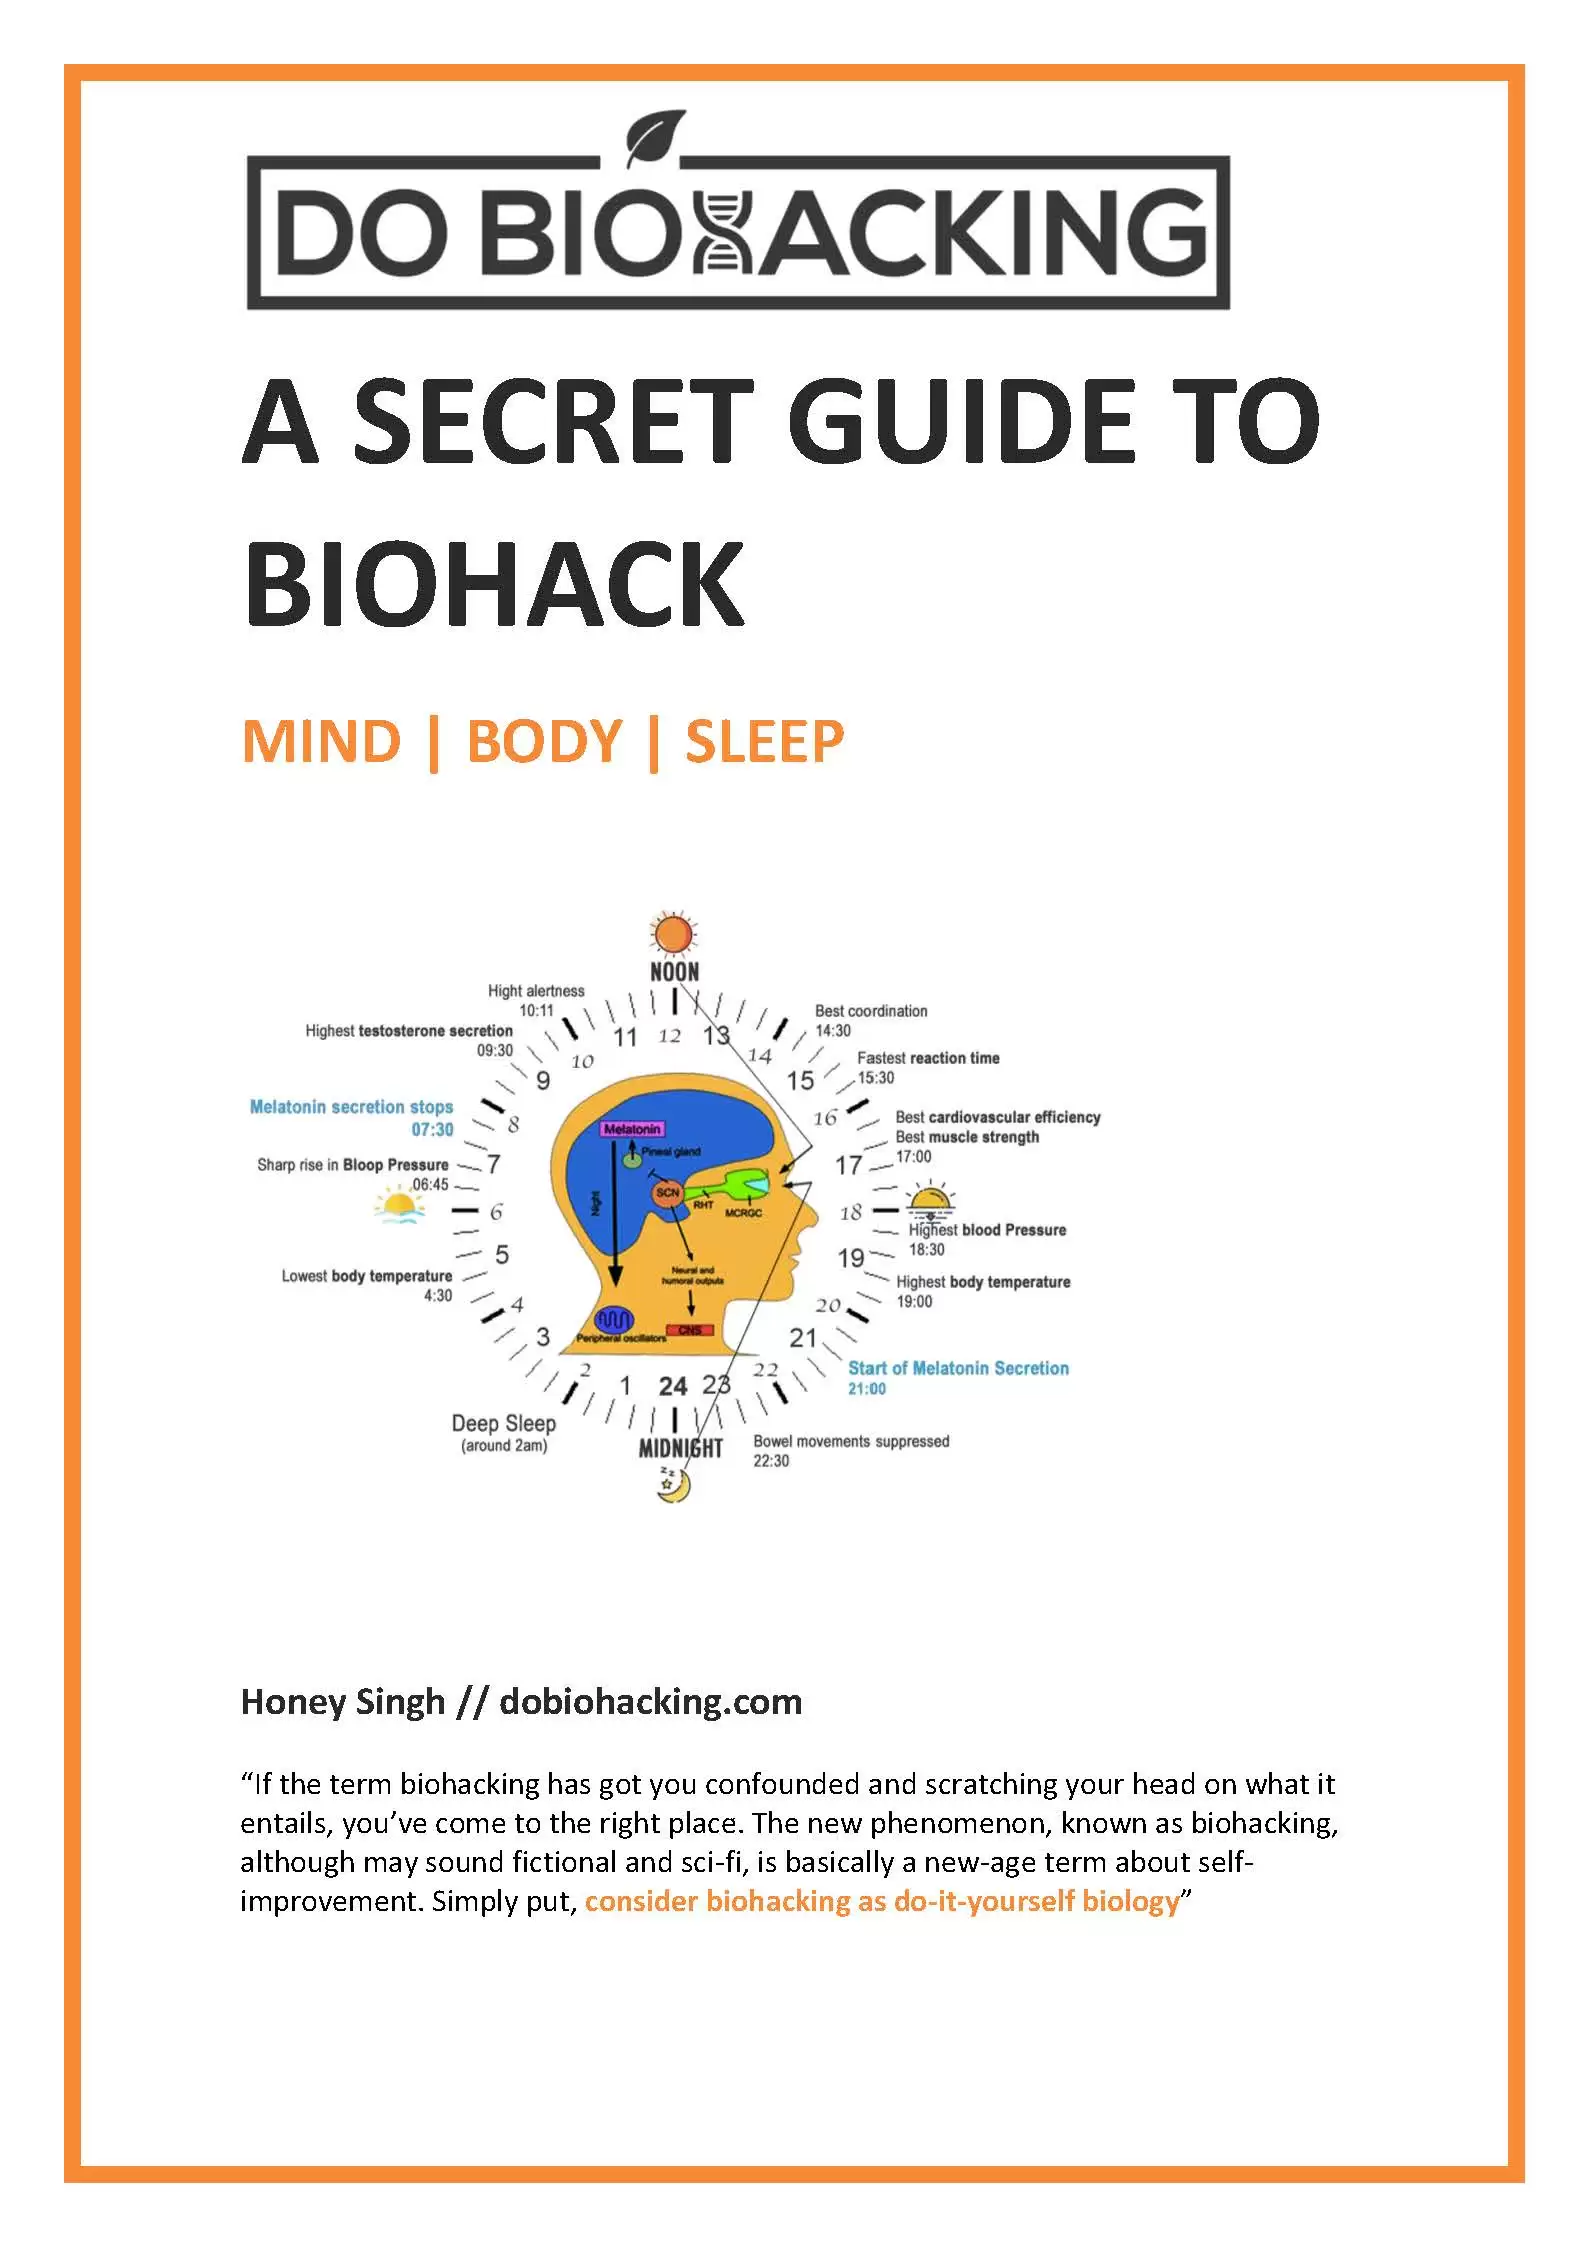 Biohacker & Book Author Honey Singh launches Biohacking Secrets